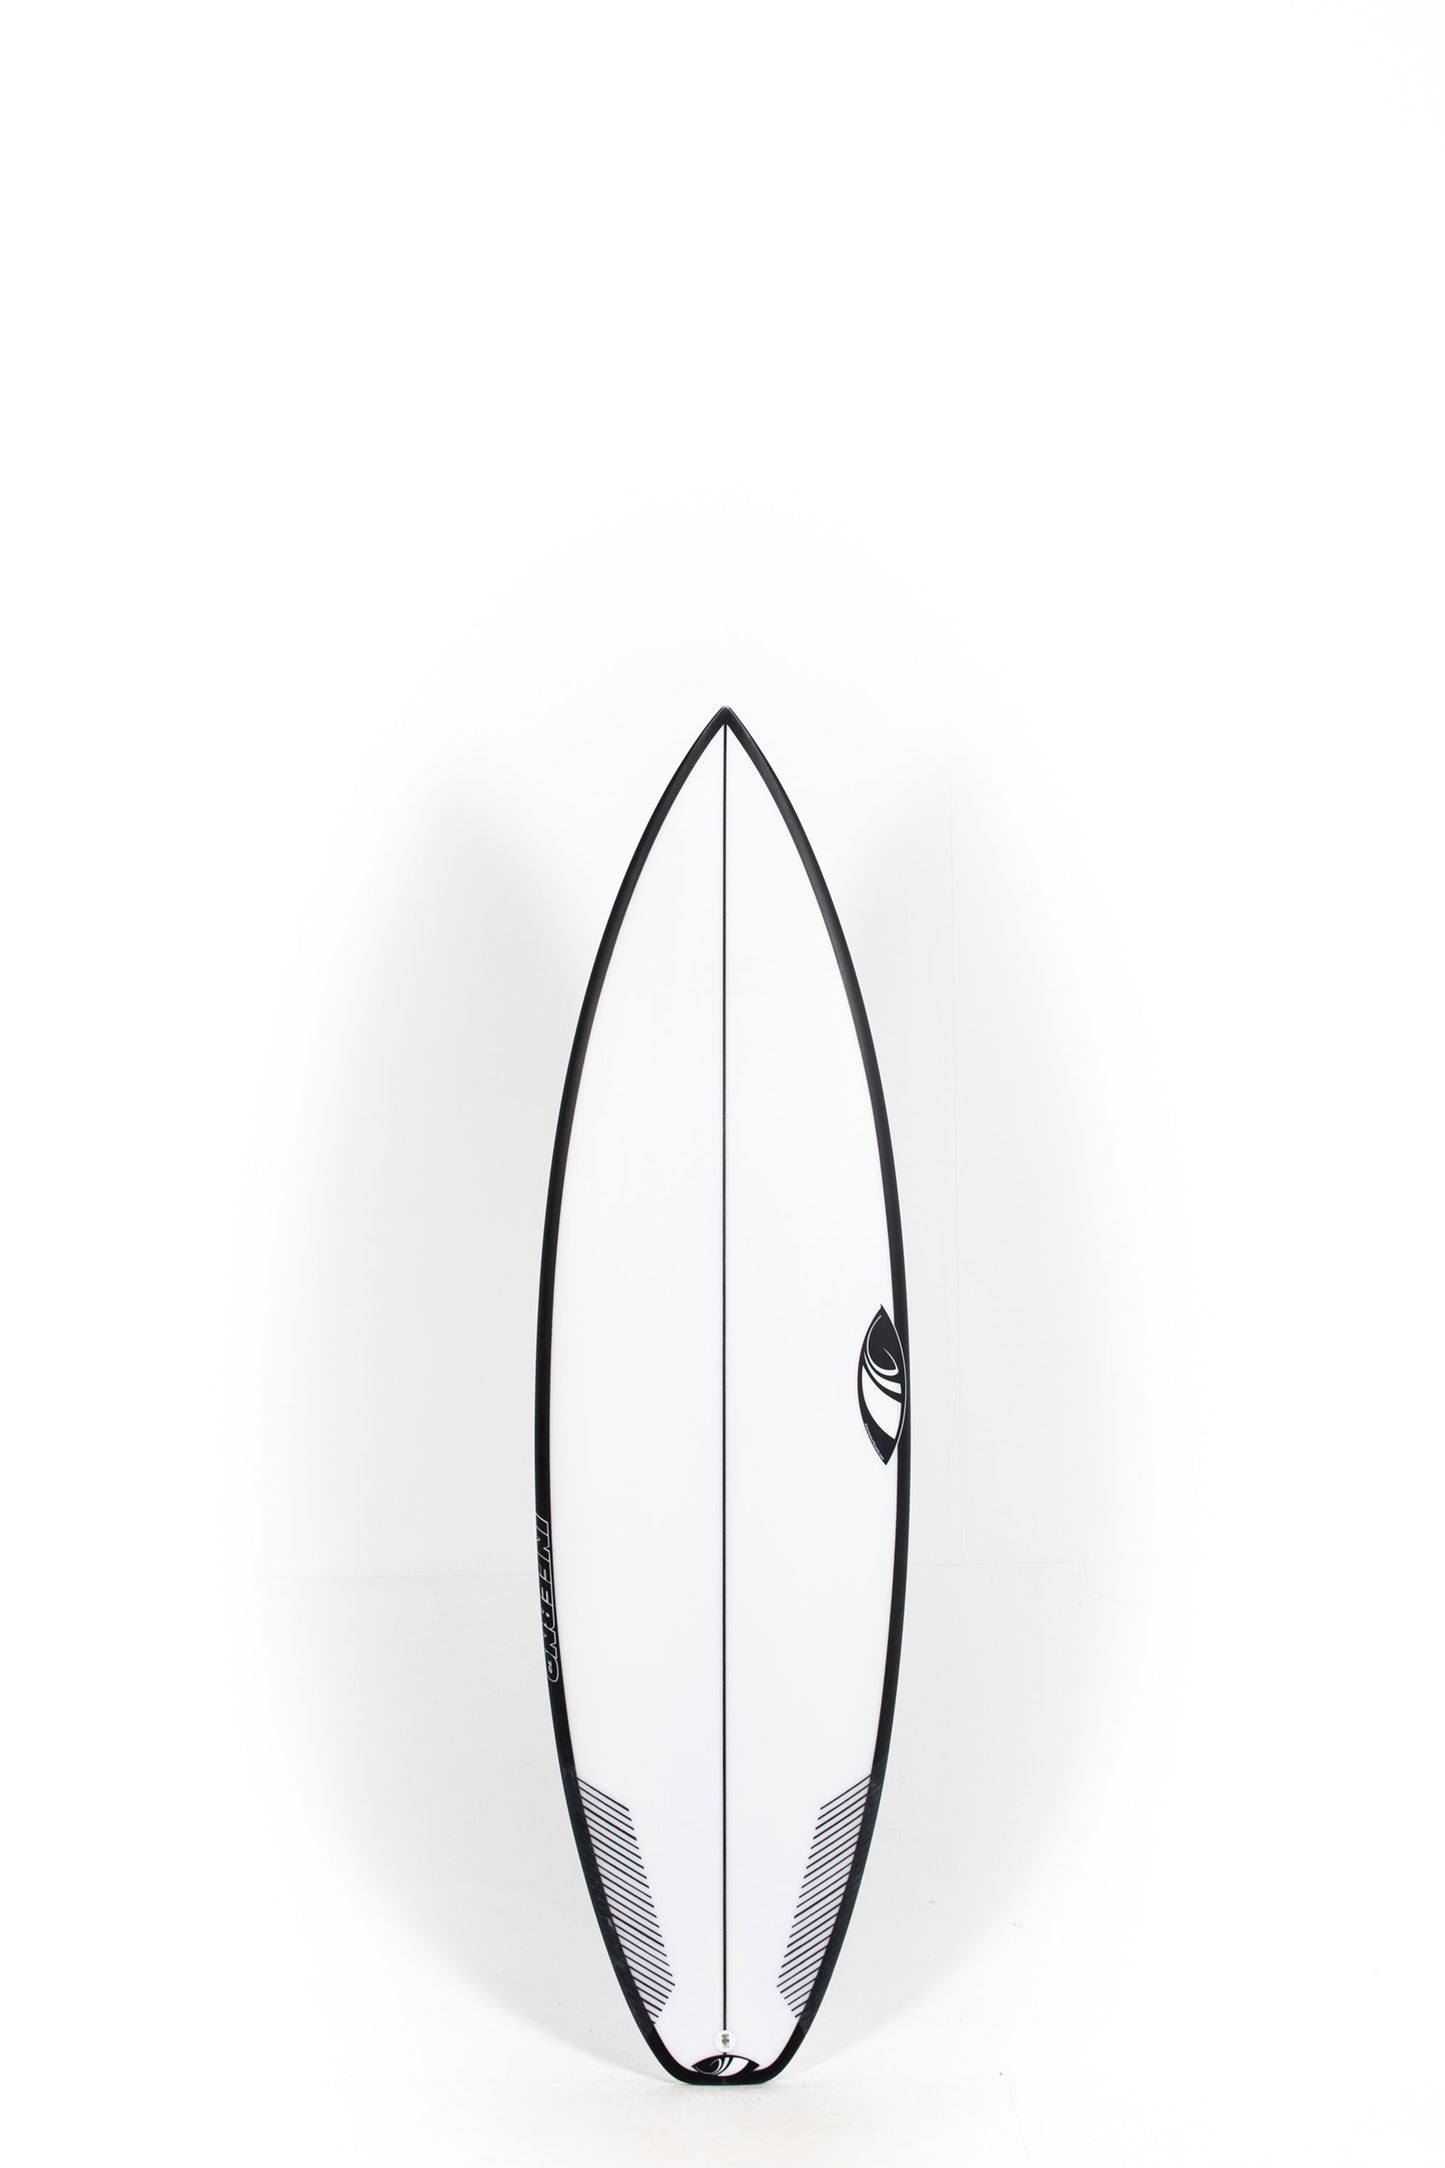 Pukas Surf Shop - Sharpeye Surfboards - INFERNO 72 by Marcio Zouvi -  5'10" x 19 1/4 x 2 5/8 - 29.9L - INFERNO